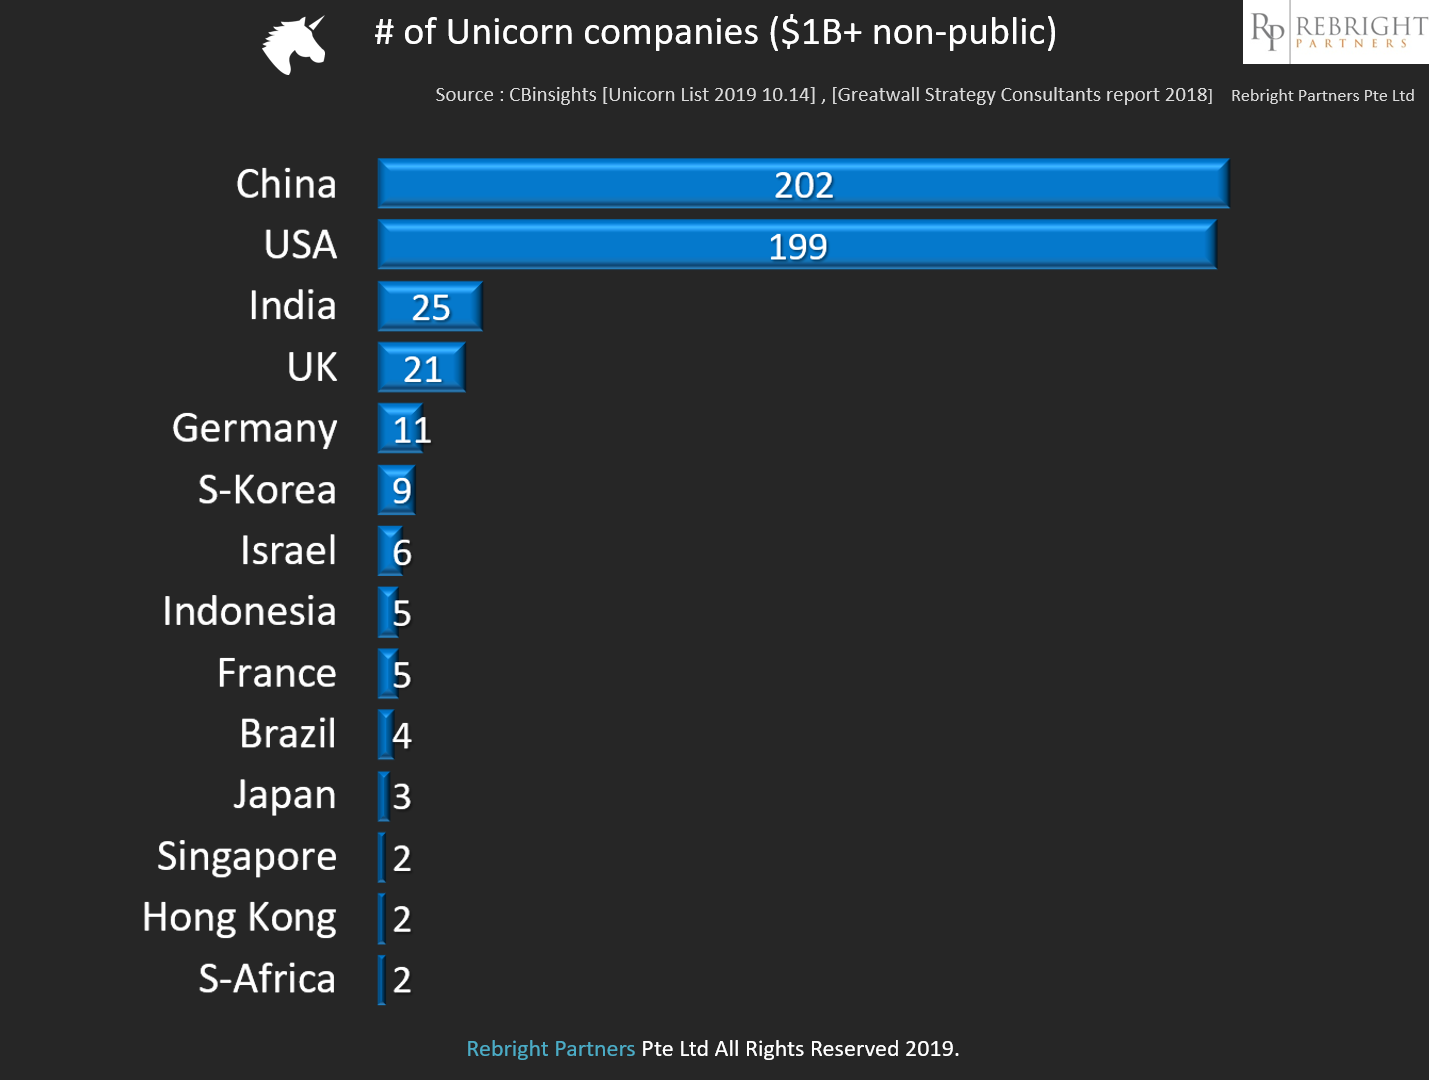 Number of Unicorn